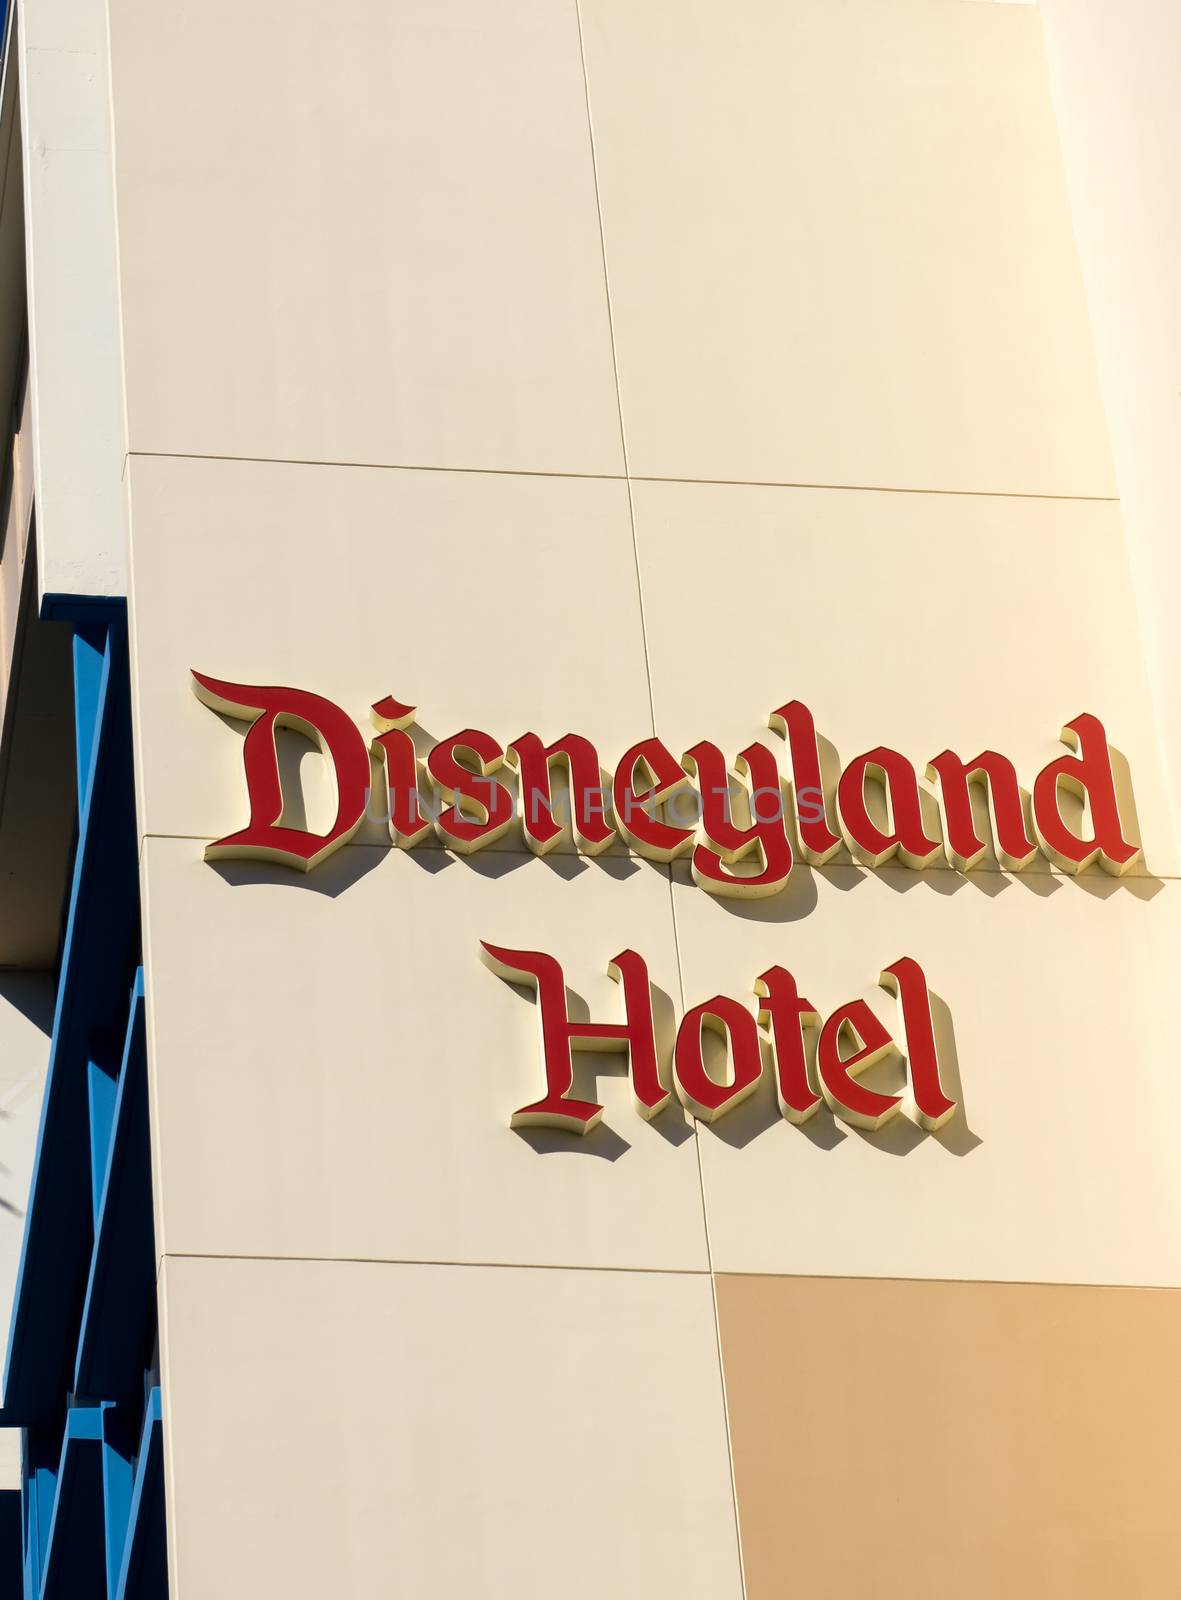 ANAHEIM, CA/USA - OCTOBER 10, 2015: Disneyland Hotel exterior. The Disneyland Hotel is a resort hotel located at the Disneyland Resort.